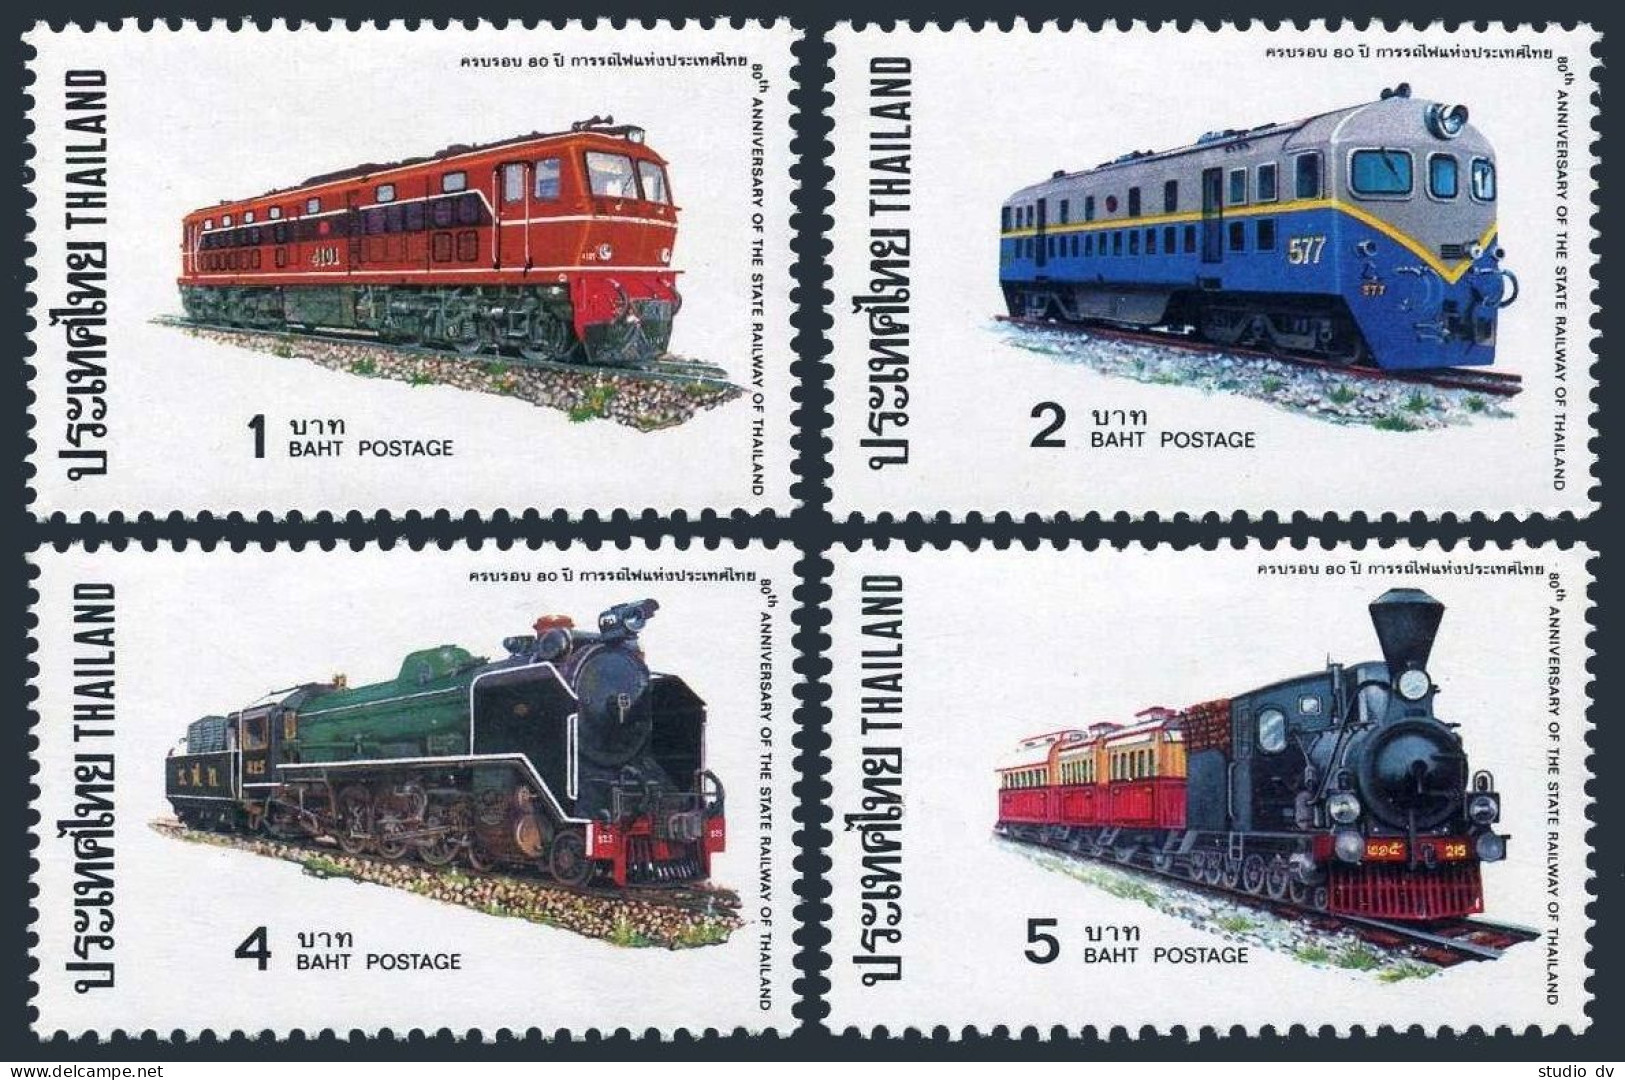 Thailand 811-814,hinged.Mi 832-835. Railroad Of Thailand,80,1977.Locomotives. - Thailand